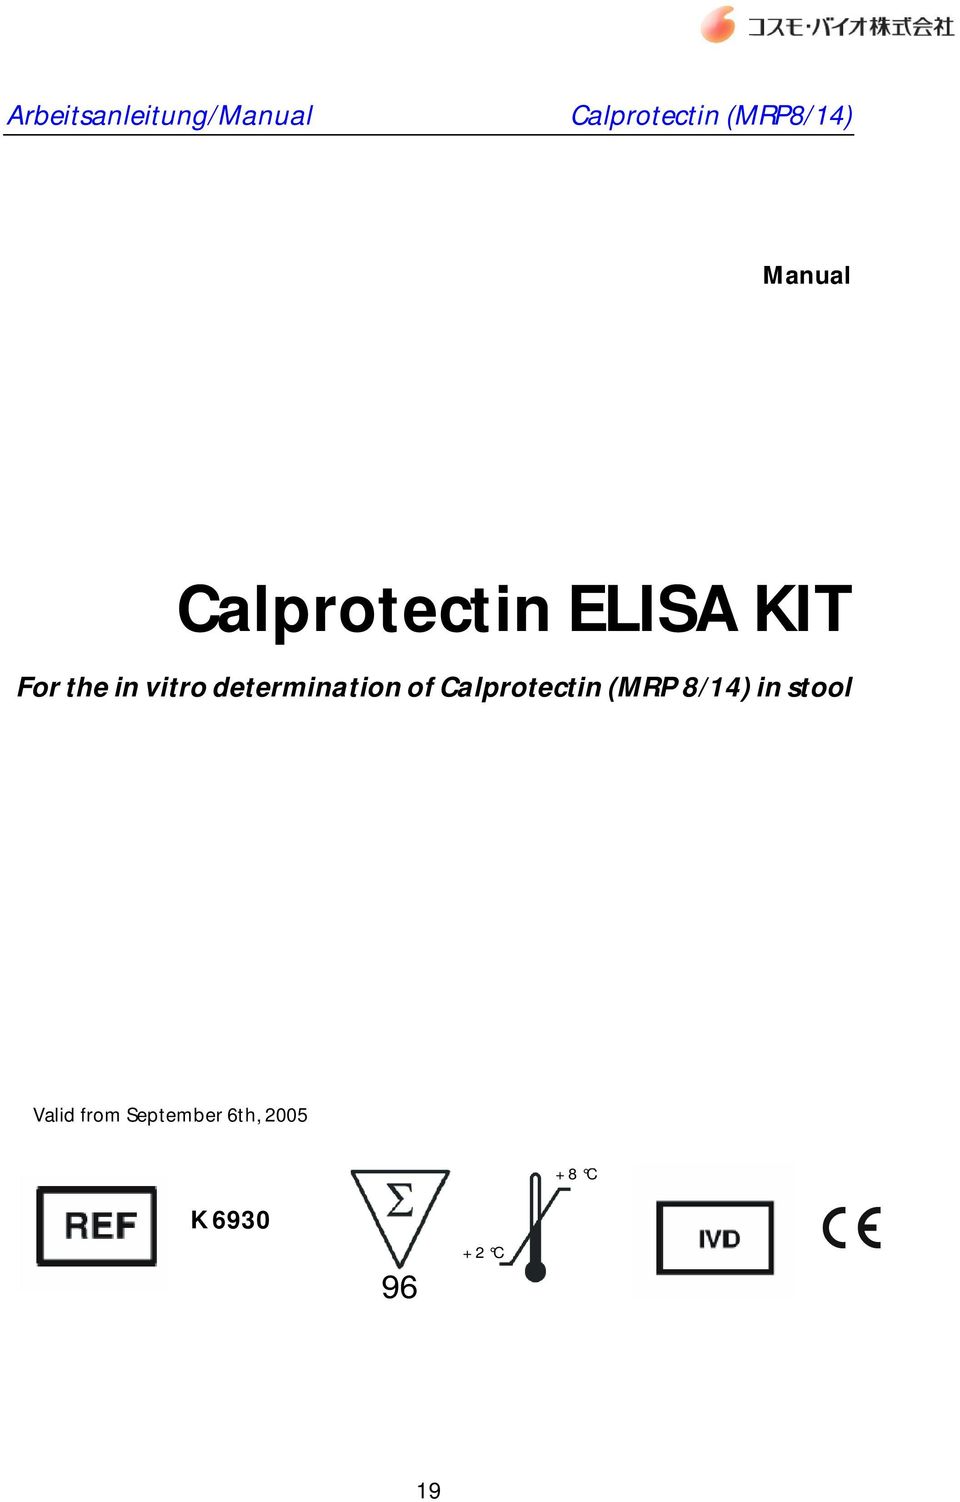 Calprotectin (MRP 8/14) in stool